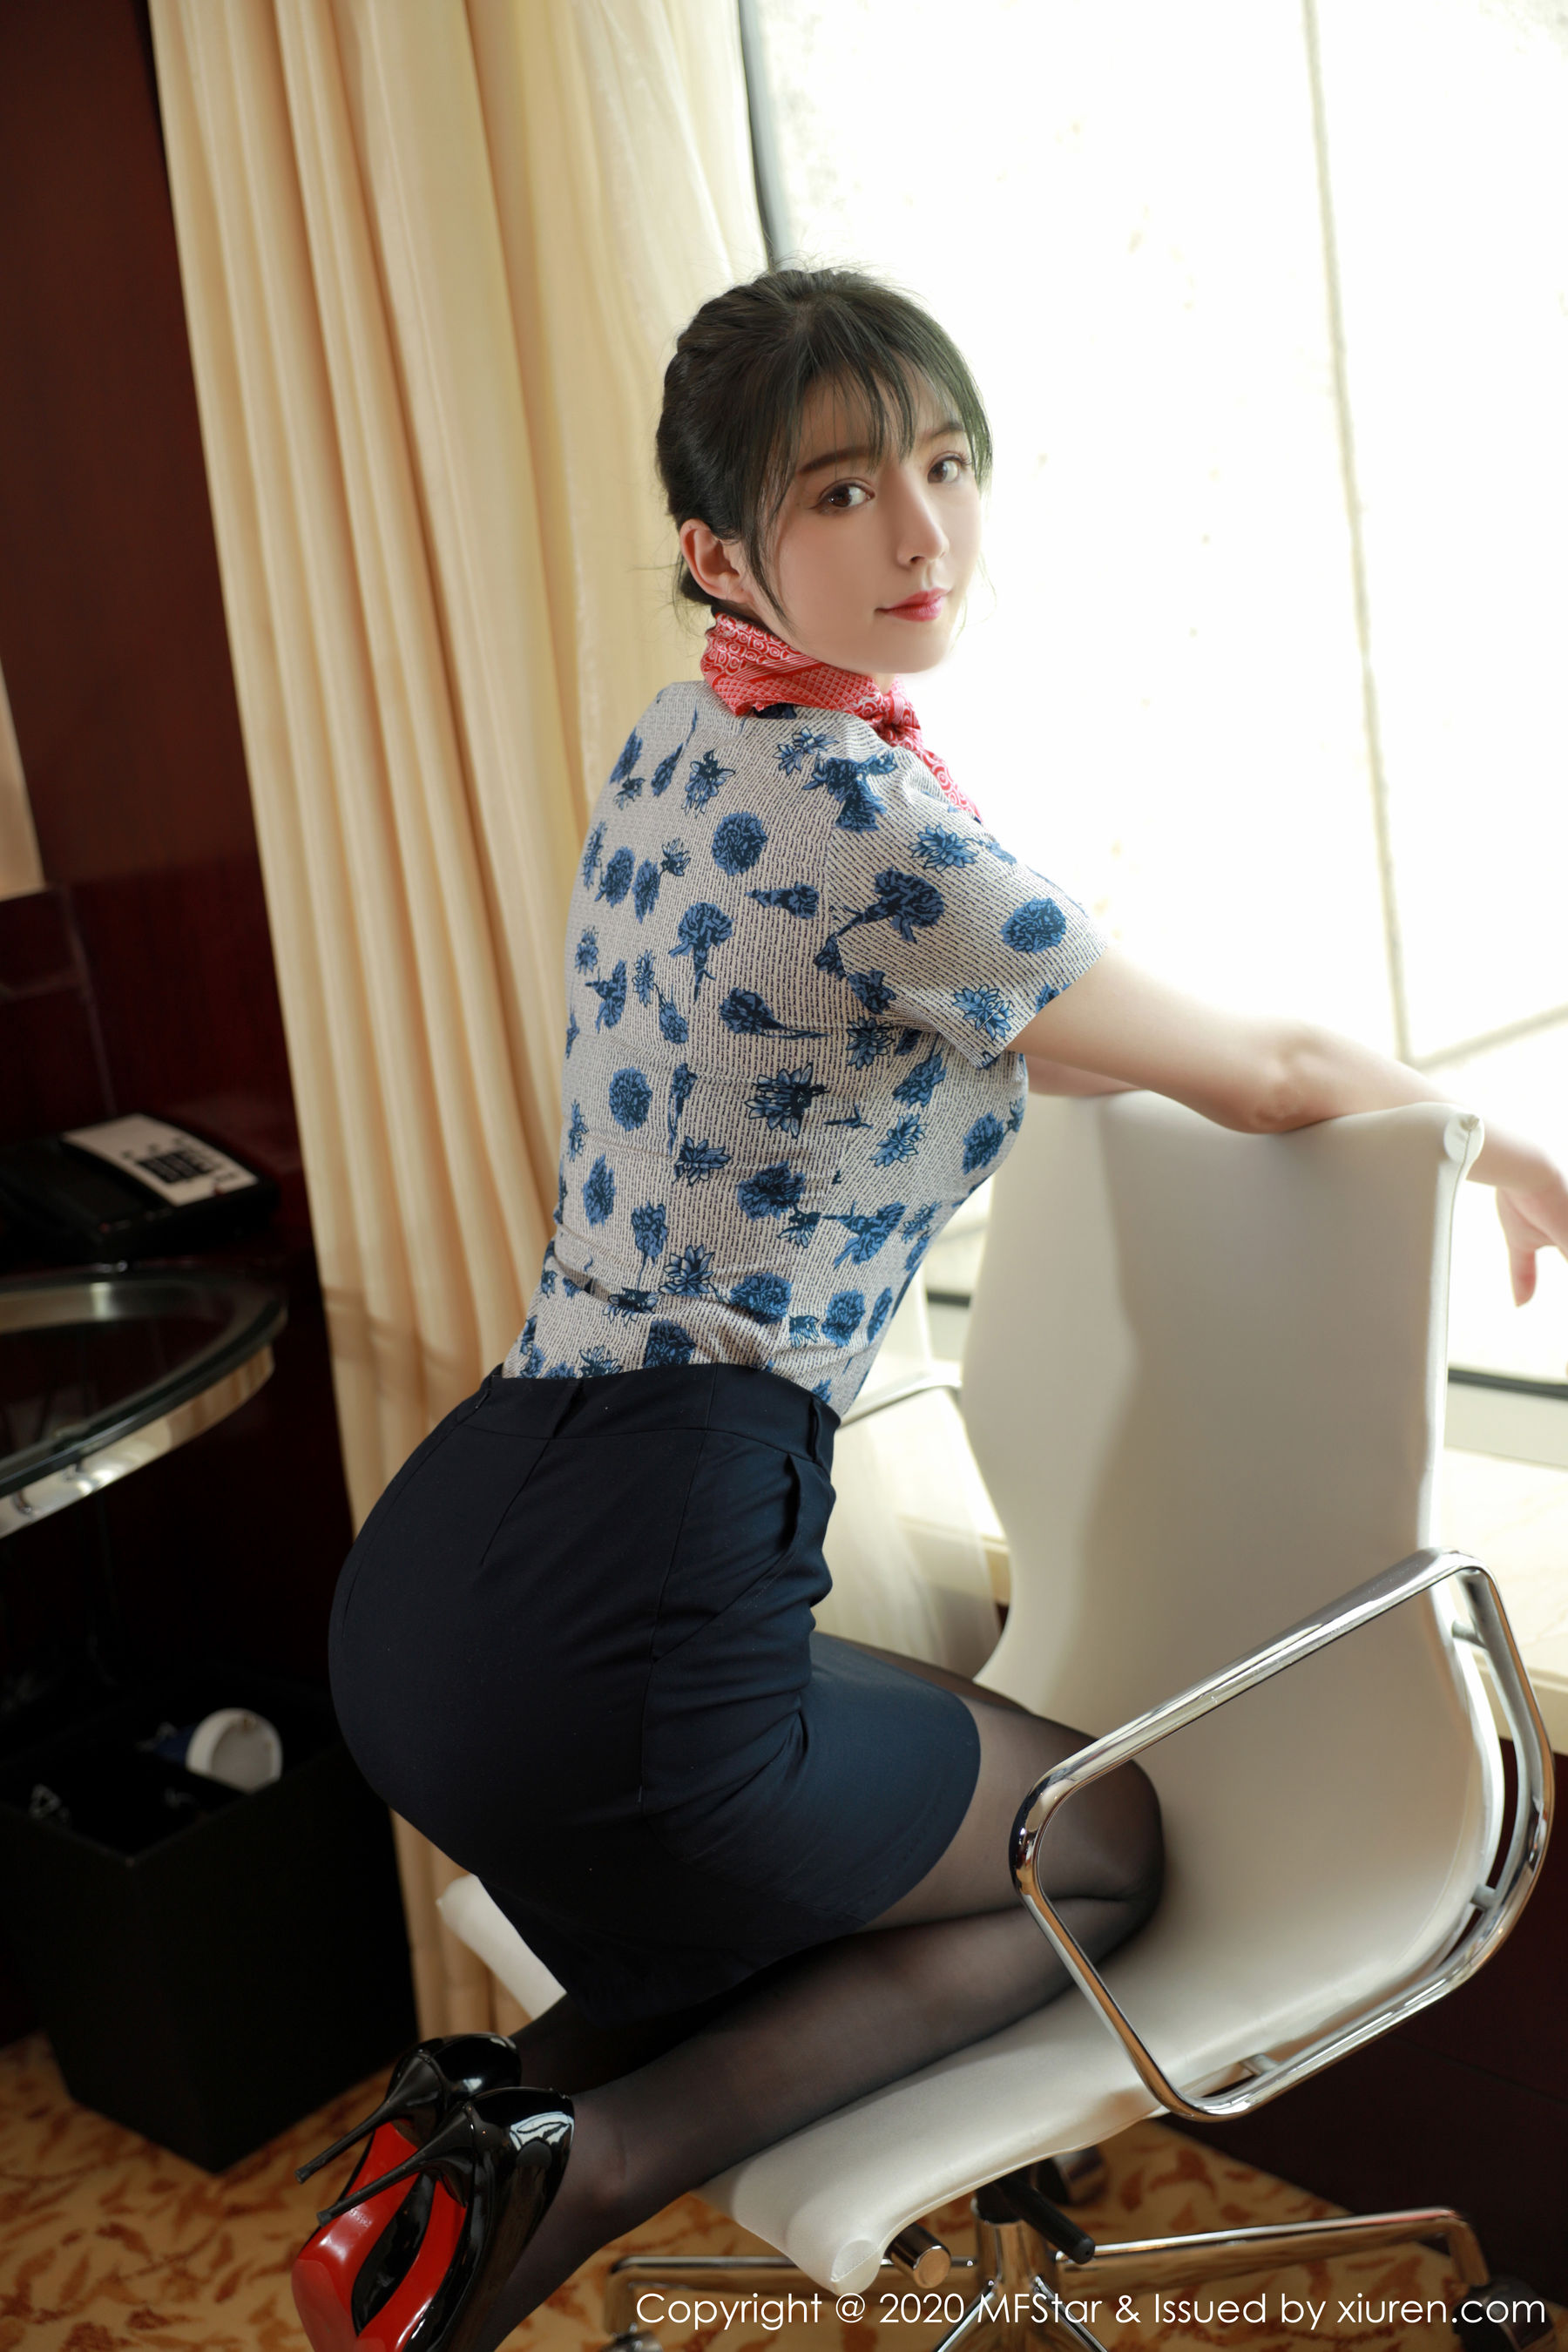 [Model Academy Mfstar] Vol.317 Yoo Youyou “Empty Mail Uniform Series” Photo Collection